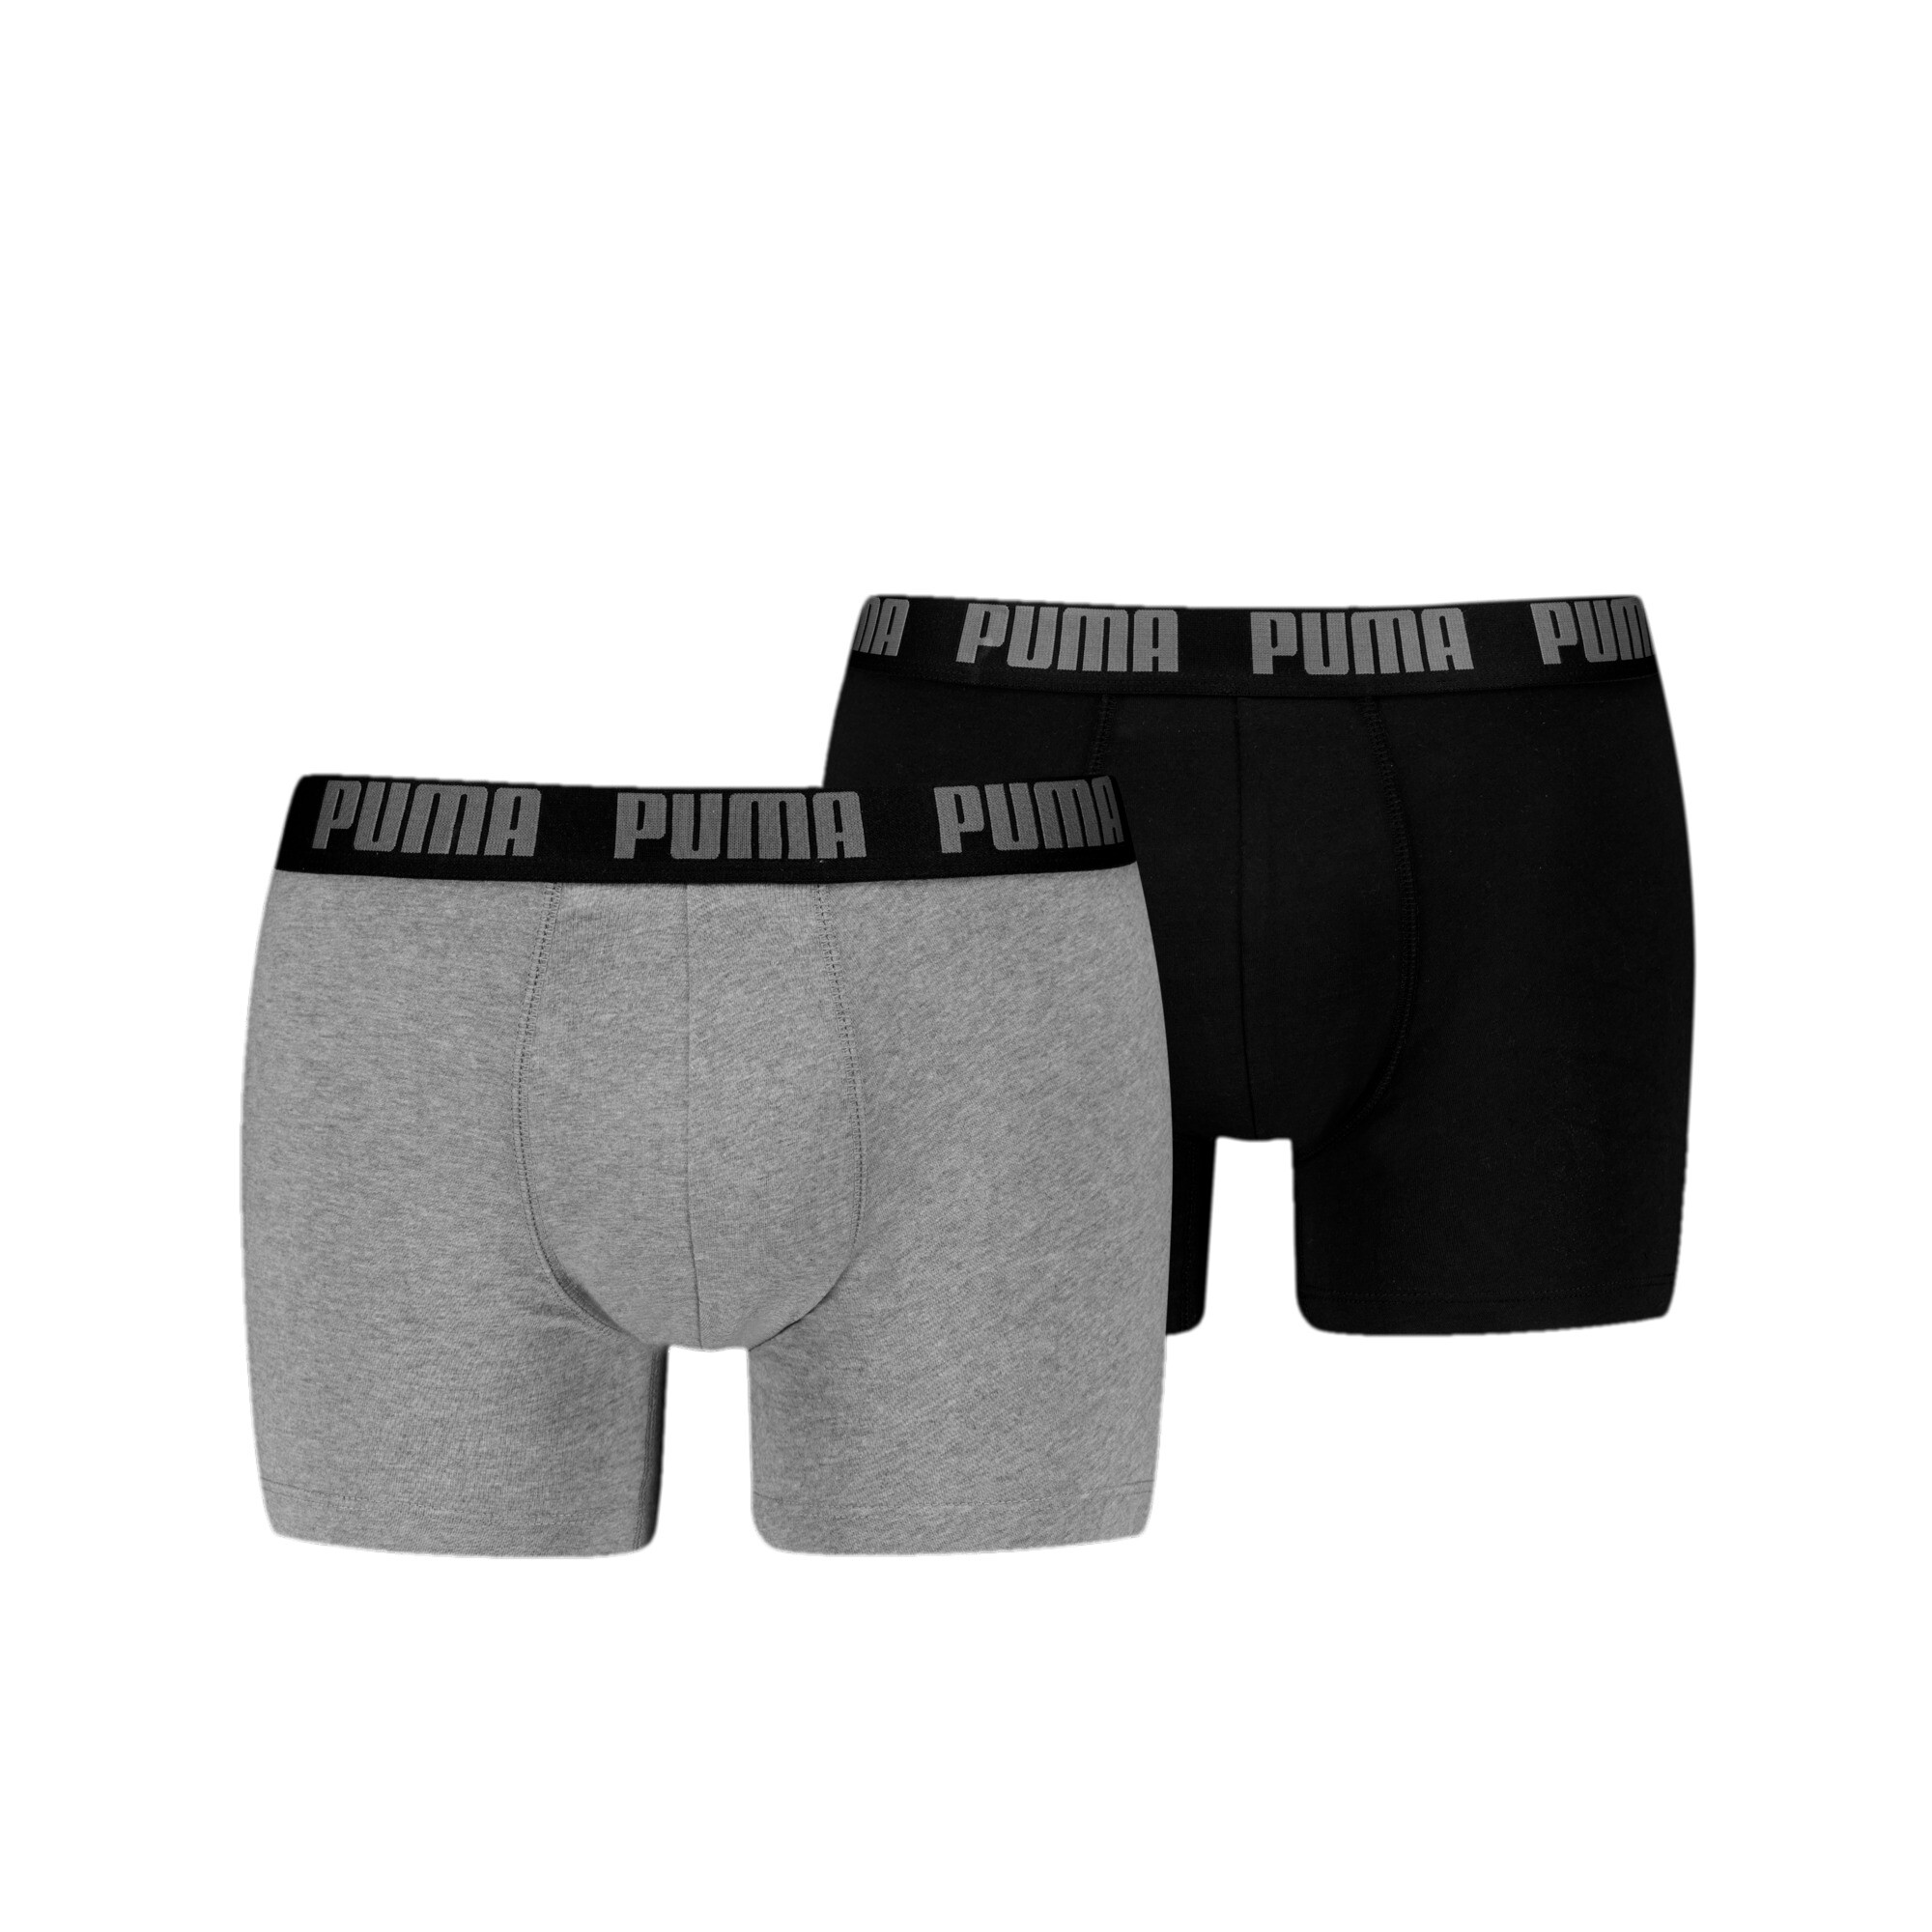 Men's Puma's Boxer Briefs 2 Pack, Gray, Size 4, Clothing